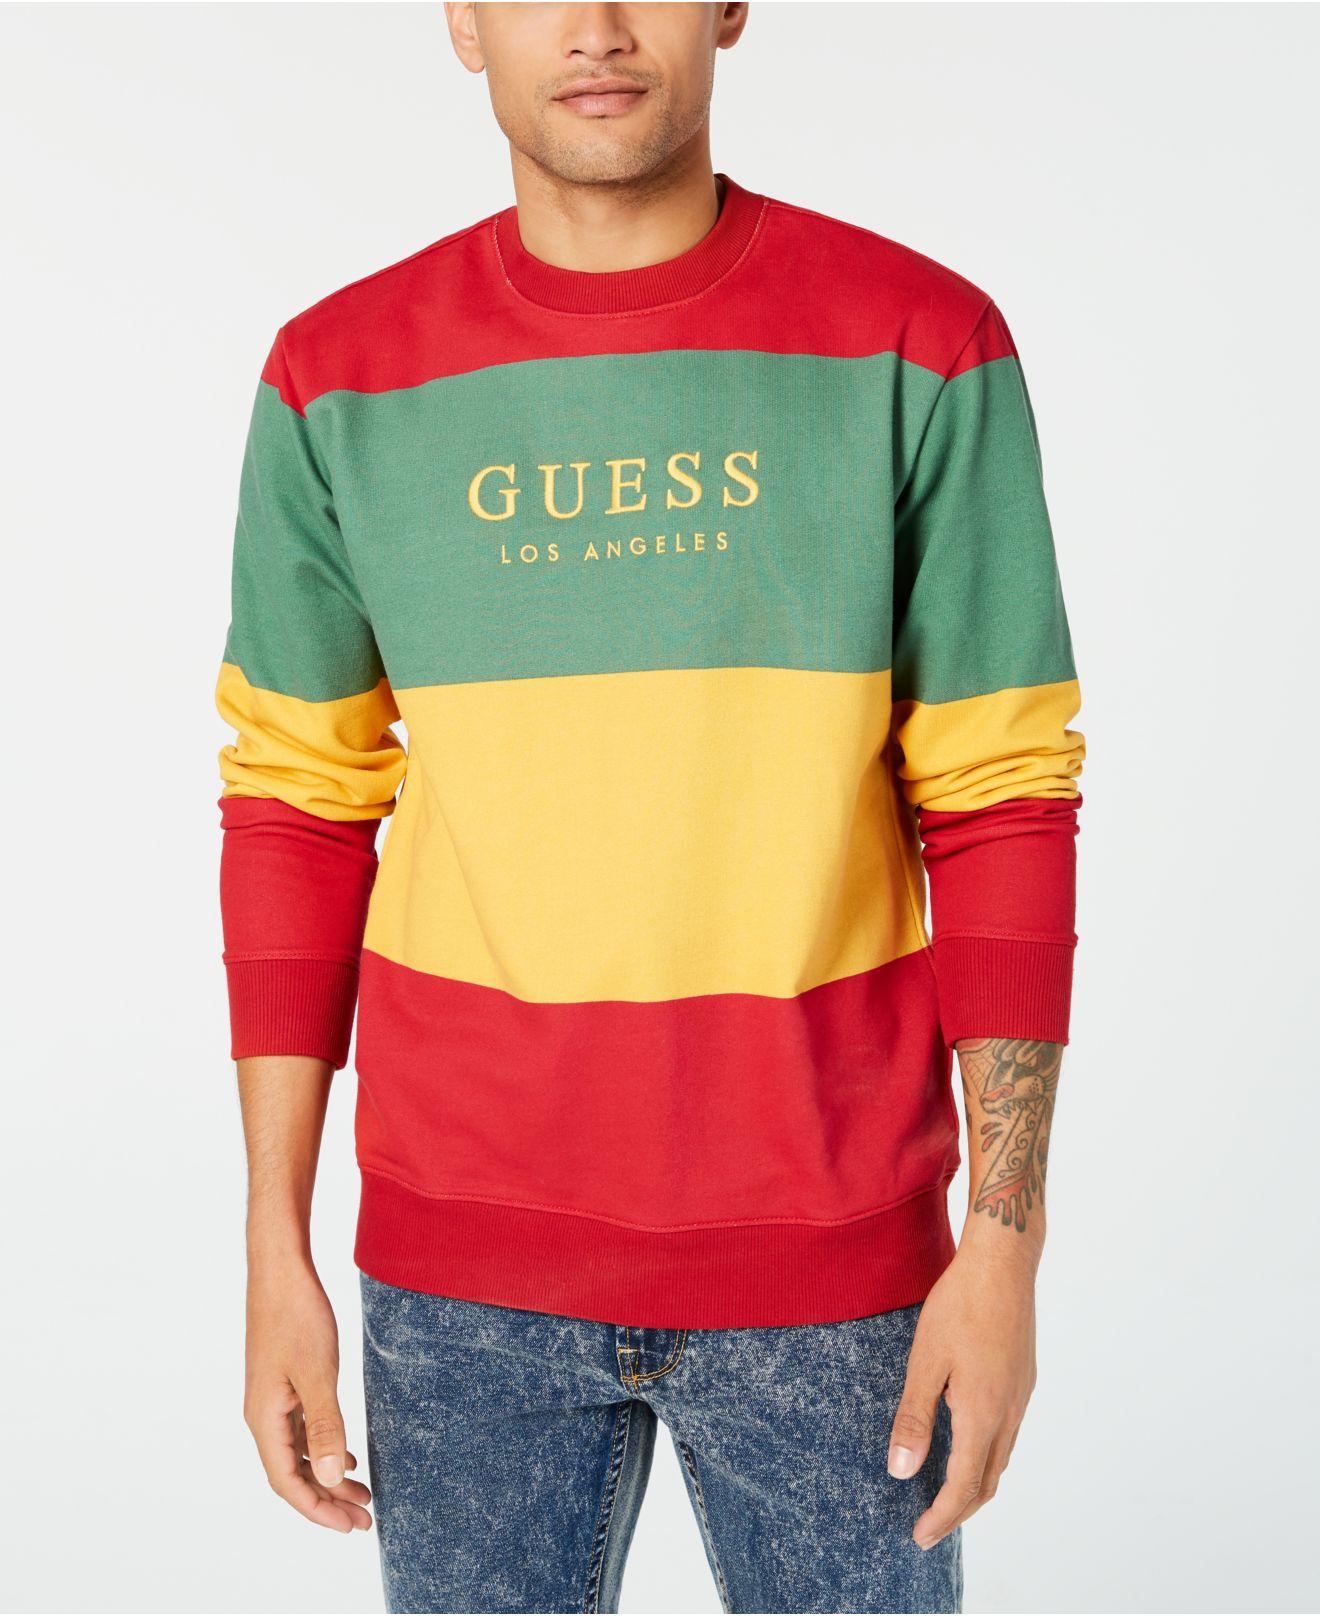 Guess Cotton Go Field Colorblocked Sweatshirt for Men - Lyst